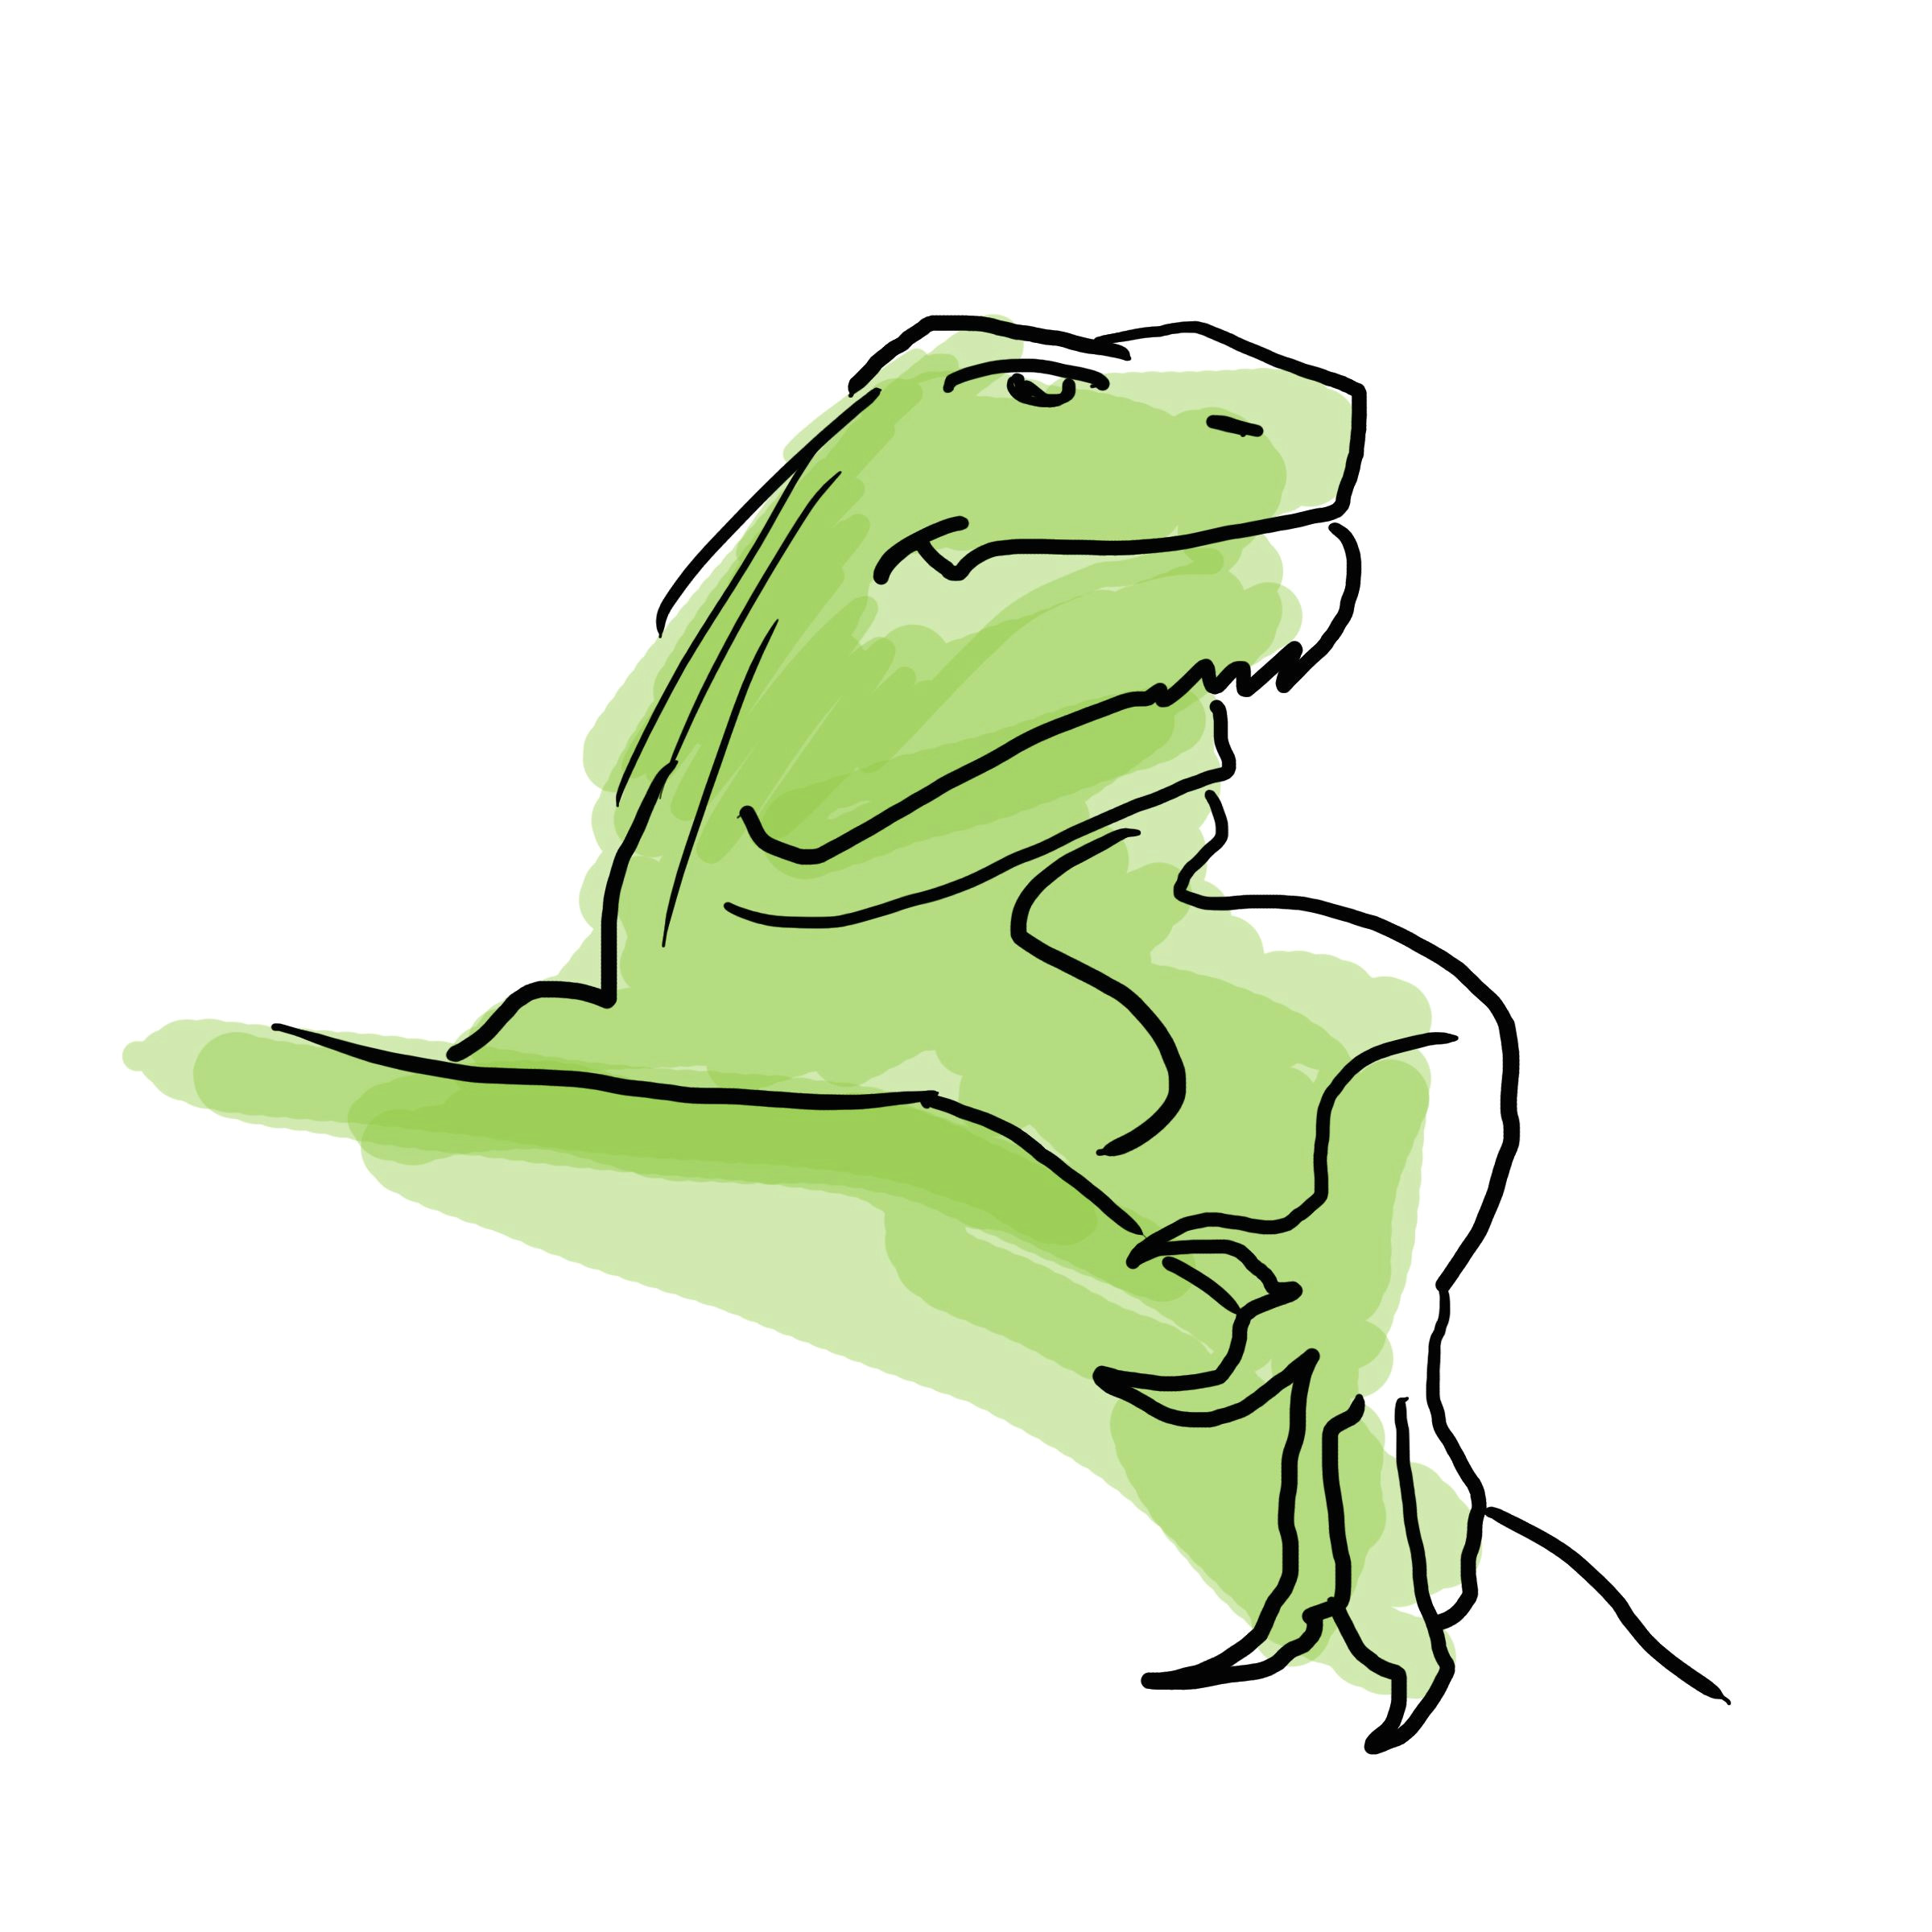 Drawing Of Cartoon Iguana Photoshop Sketch Of An Iguana Susan Sieber Animal Art Sketches